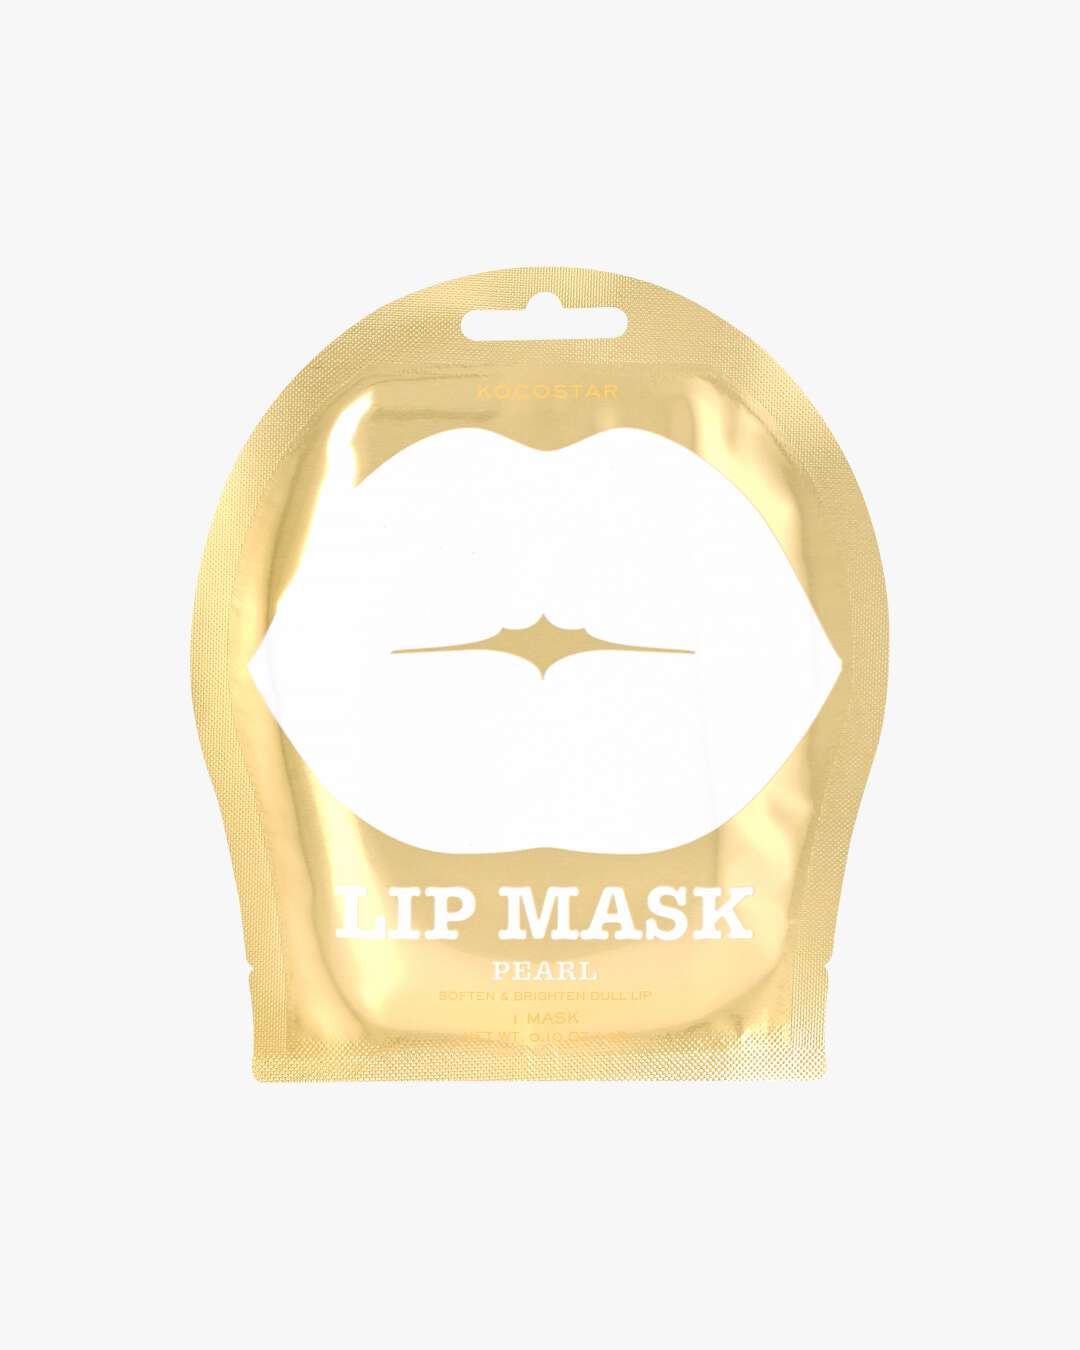 Lip Mask Pearl 1 stk